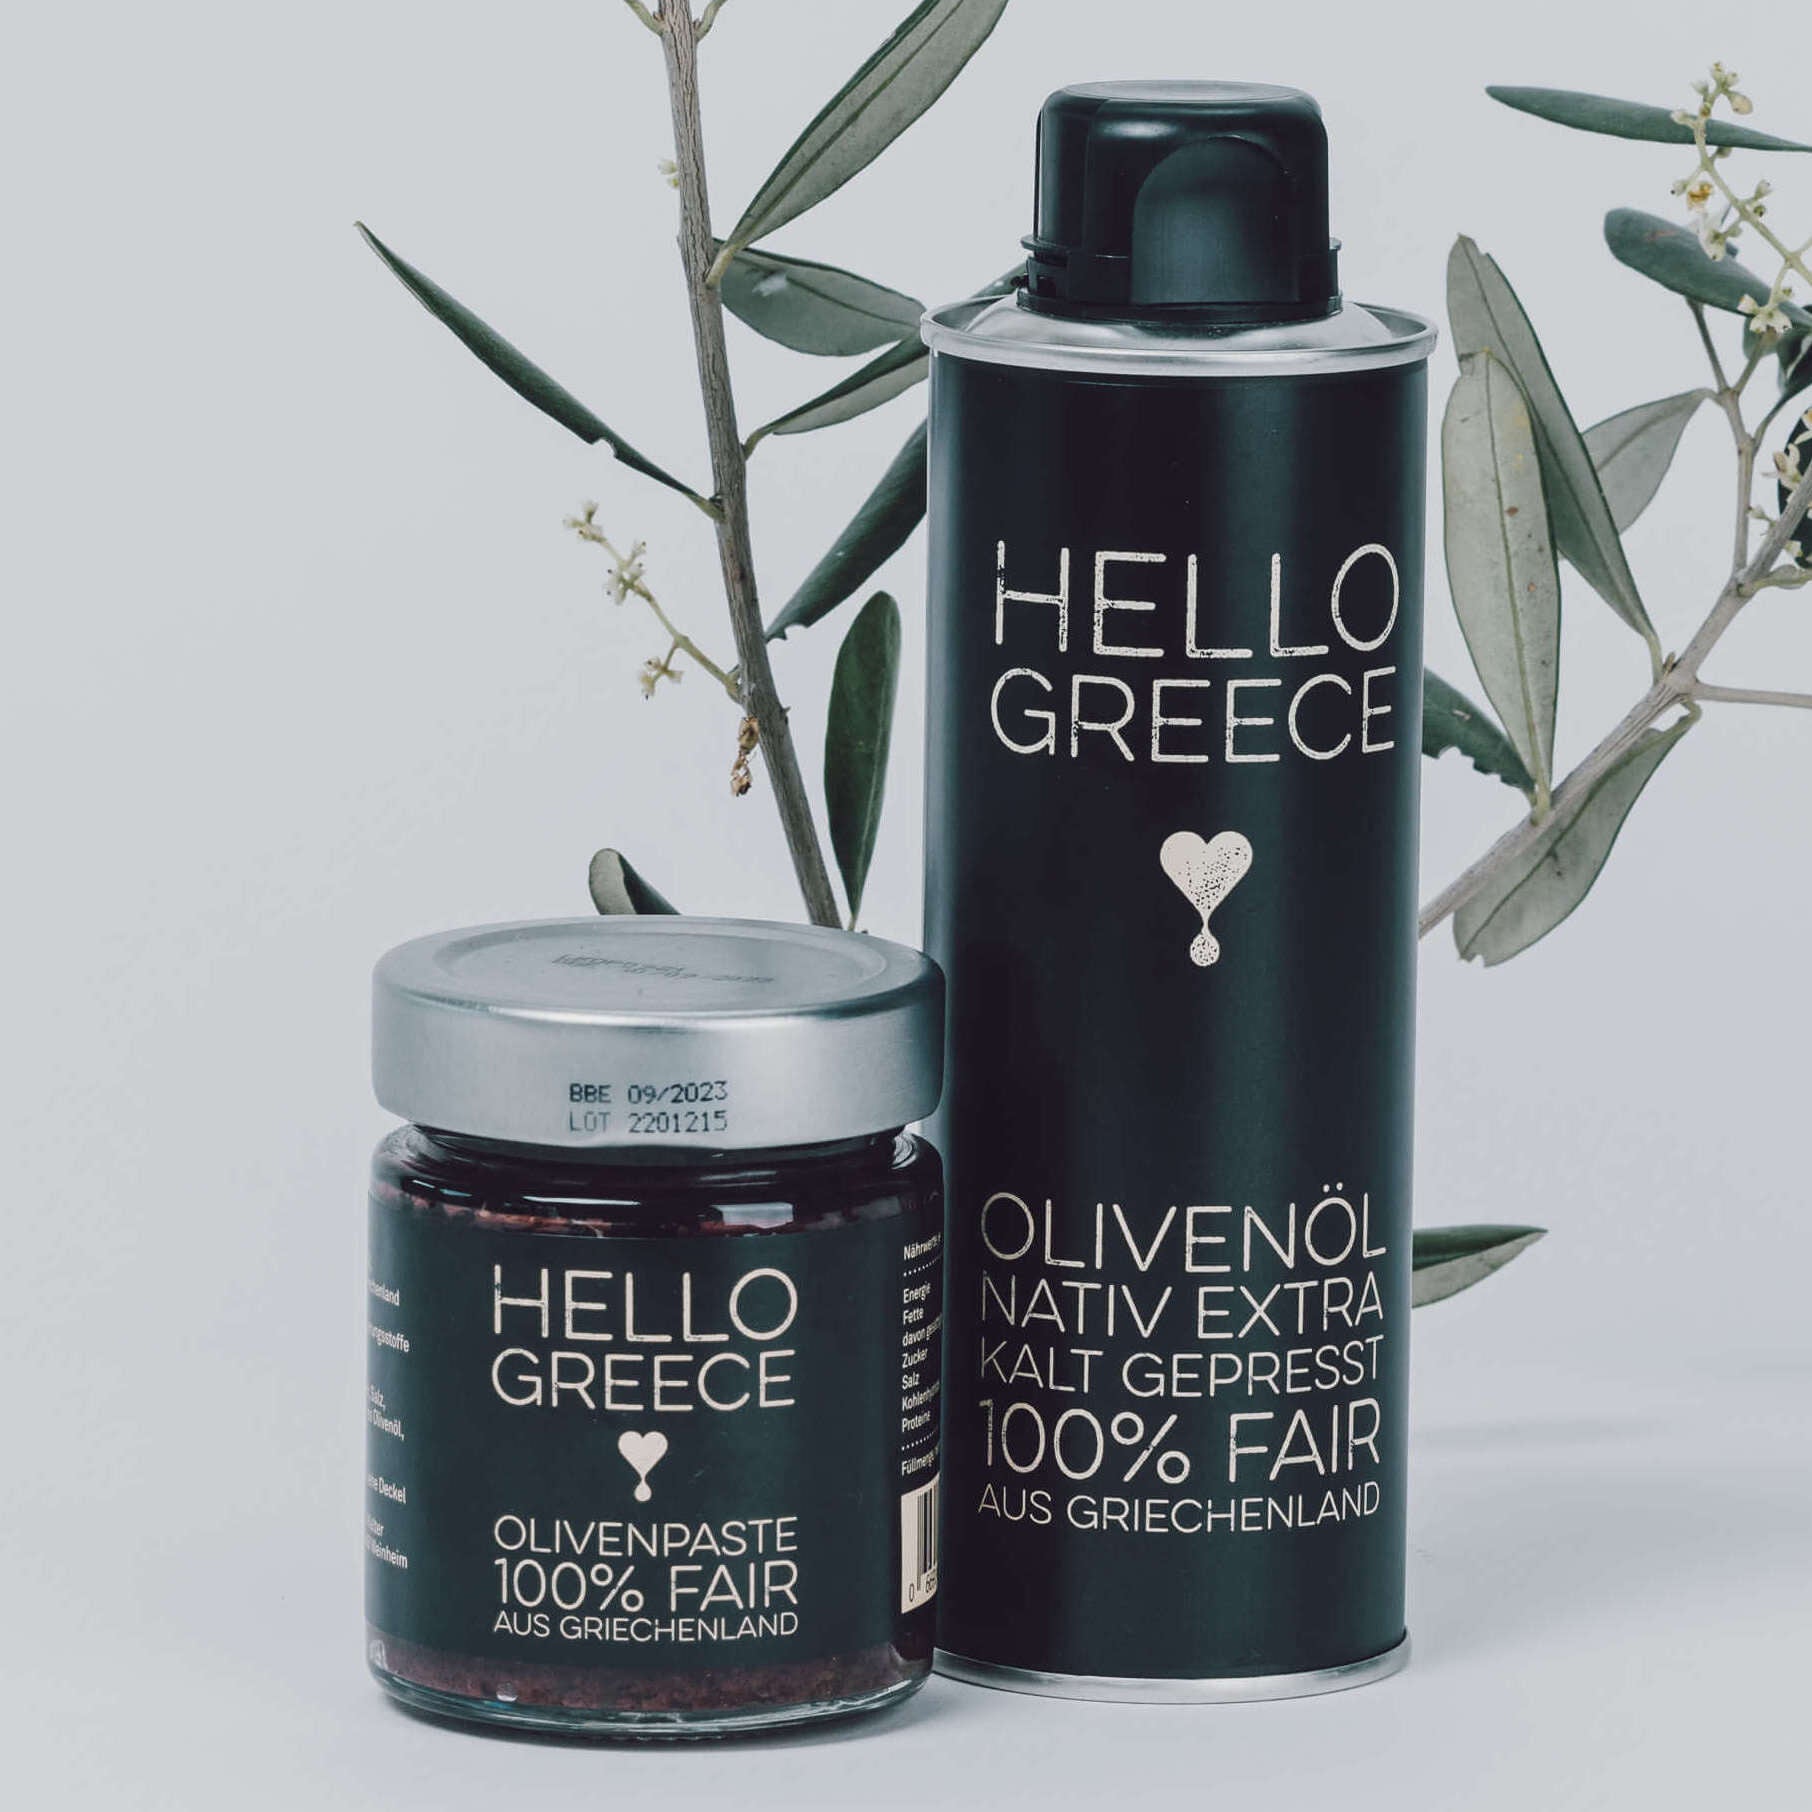 Olivenöl testen